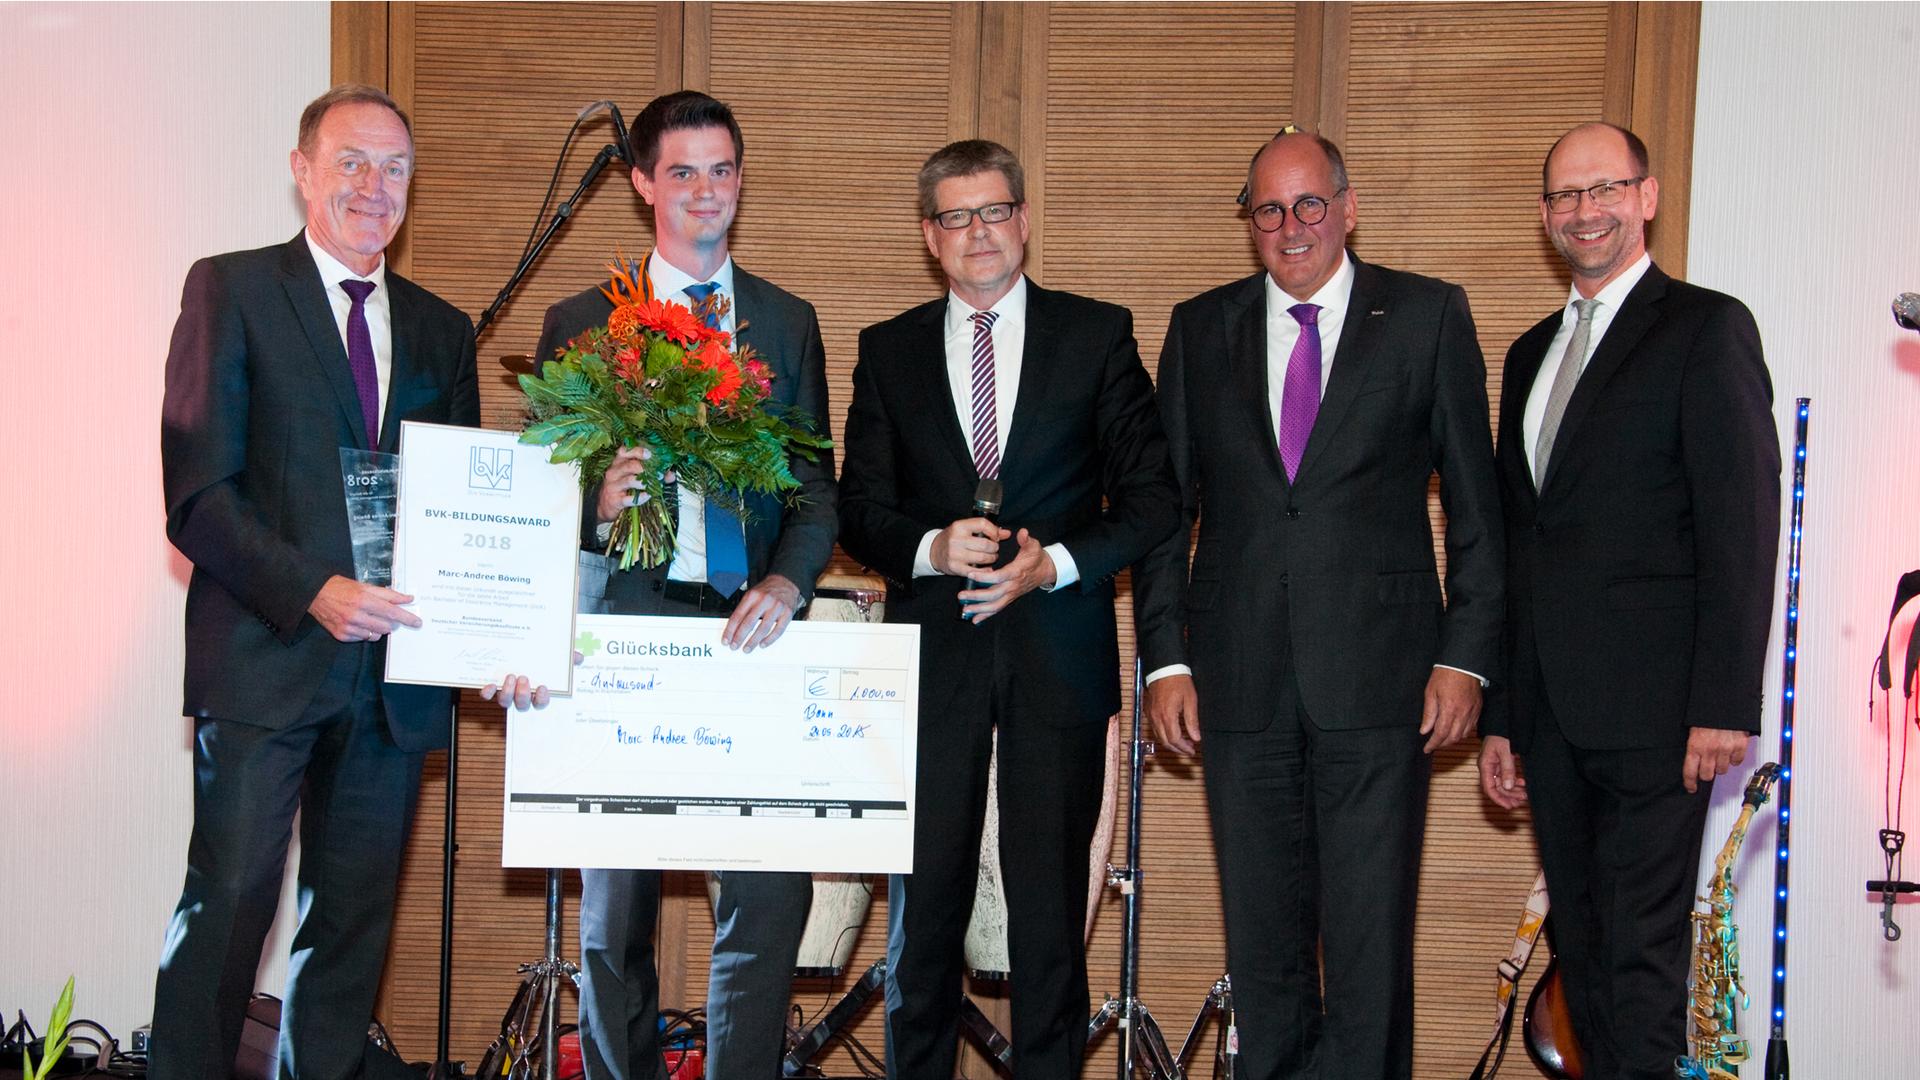 BVK verleiht Award für beste vertriebsorientierte Bachelor-Thesis im DVA-Studiengang „Insurance Management“